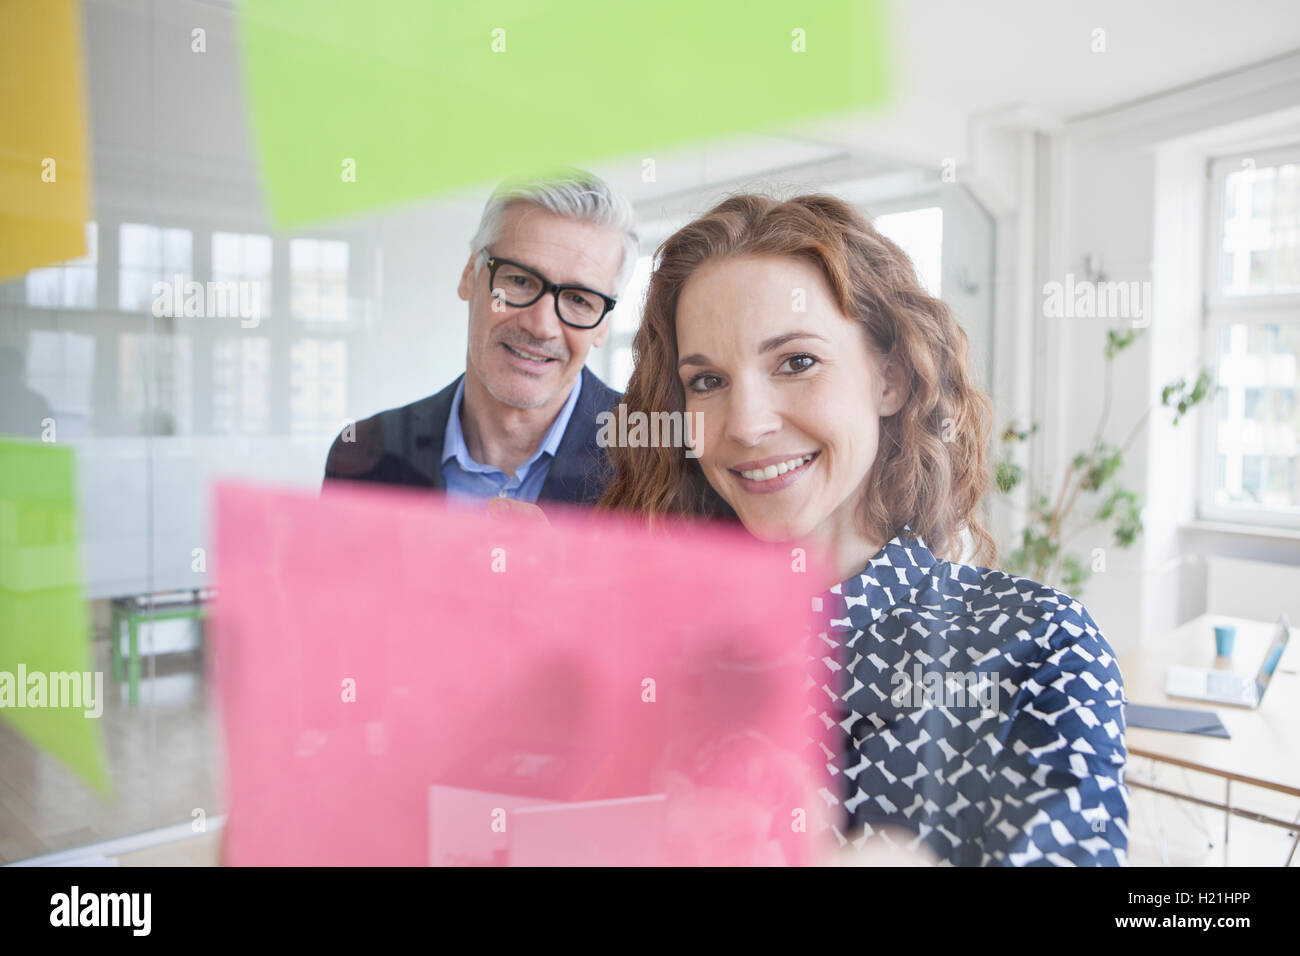 Businessman and woman looking at adhesive notes at glass pane Stock Photo